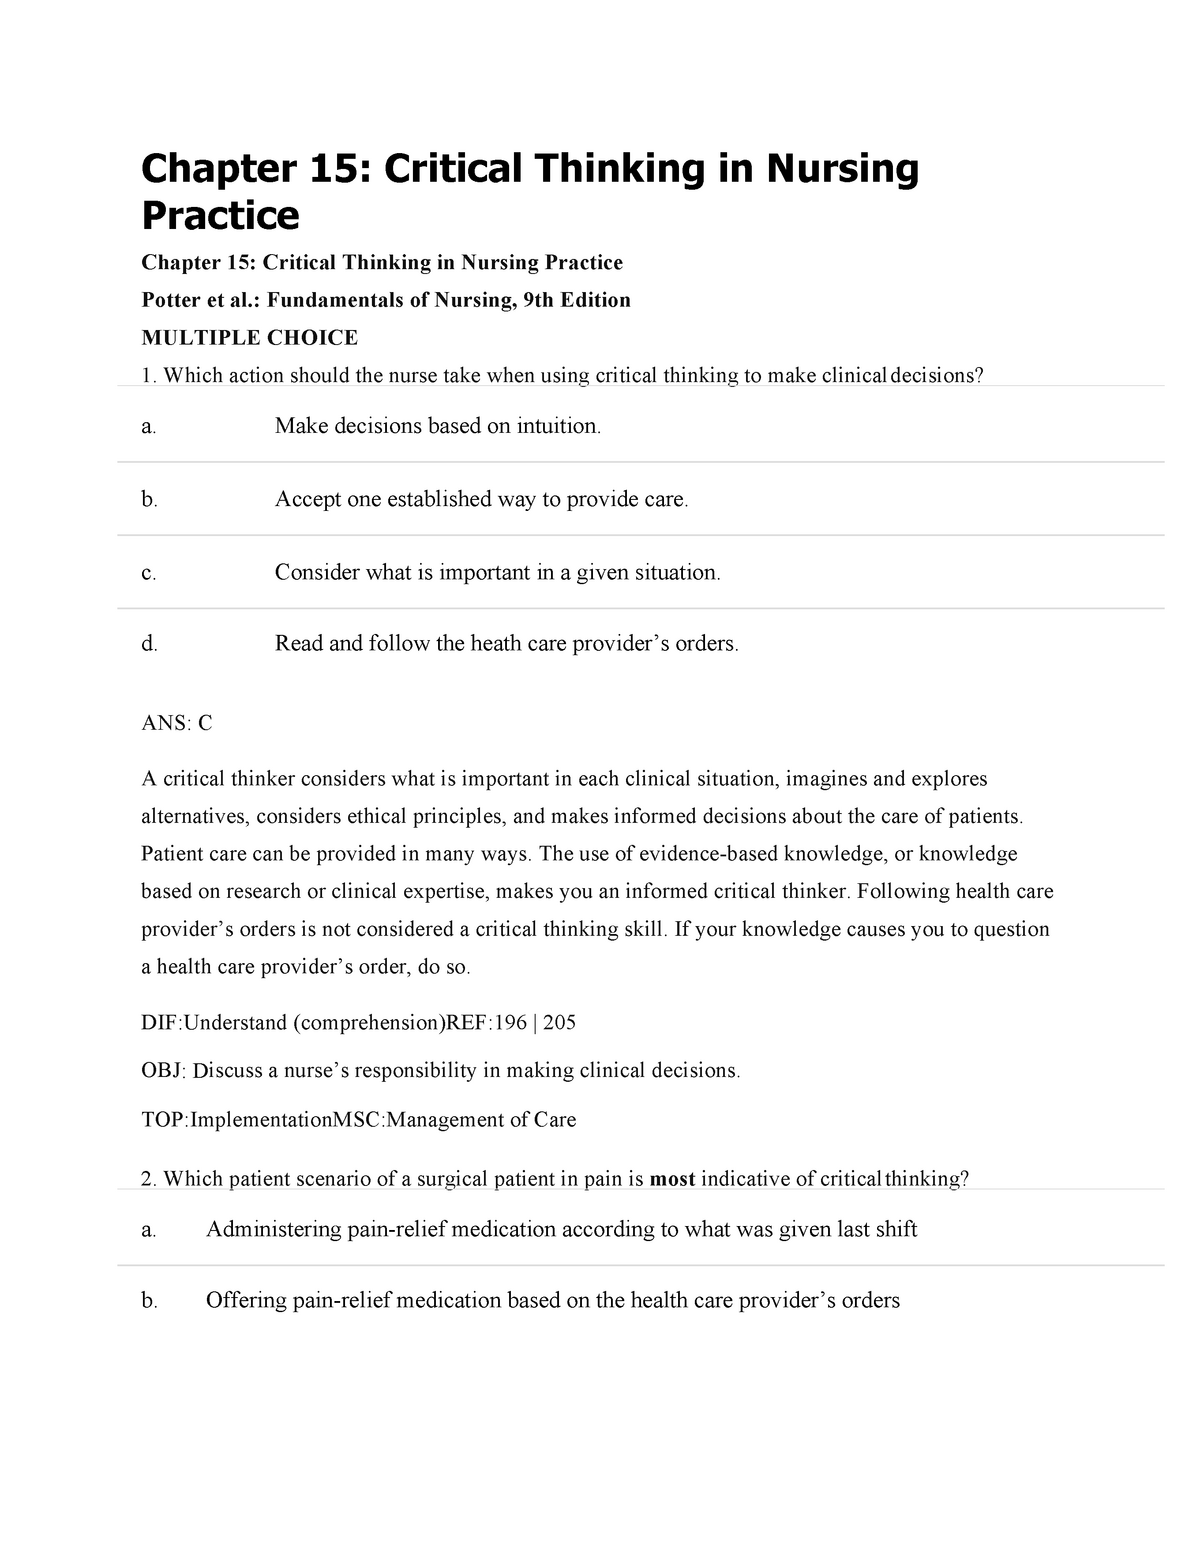 fundamentals of nursing chapter 15 critical thinking